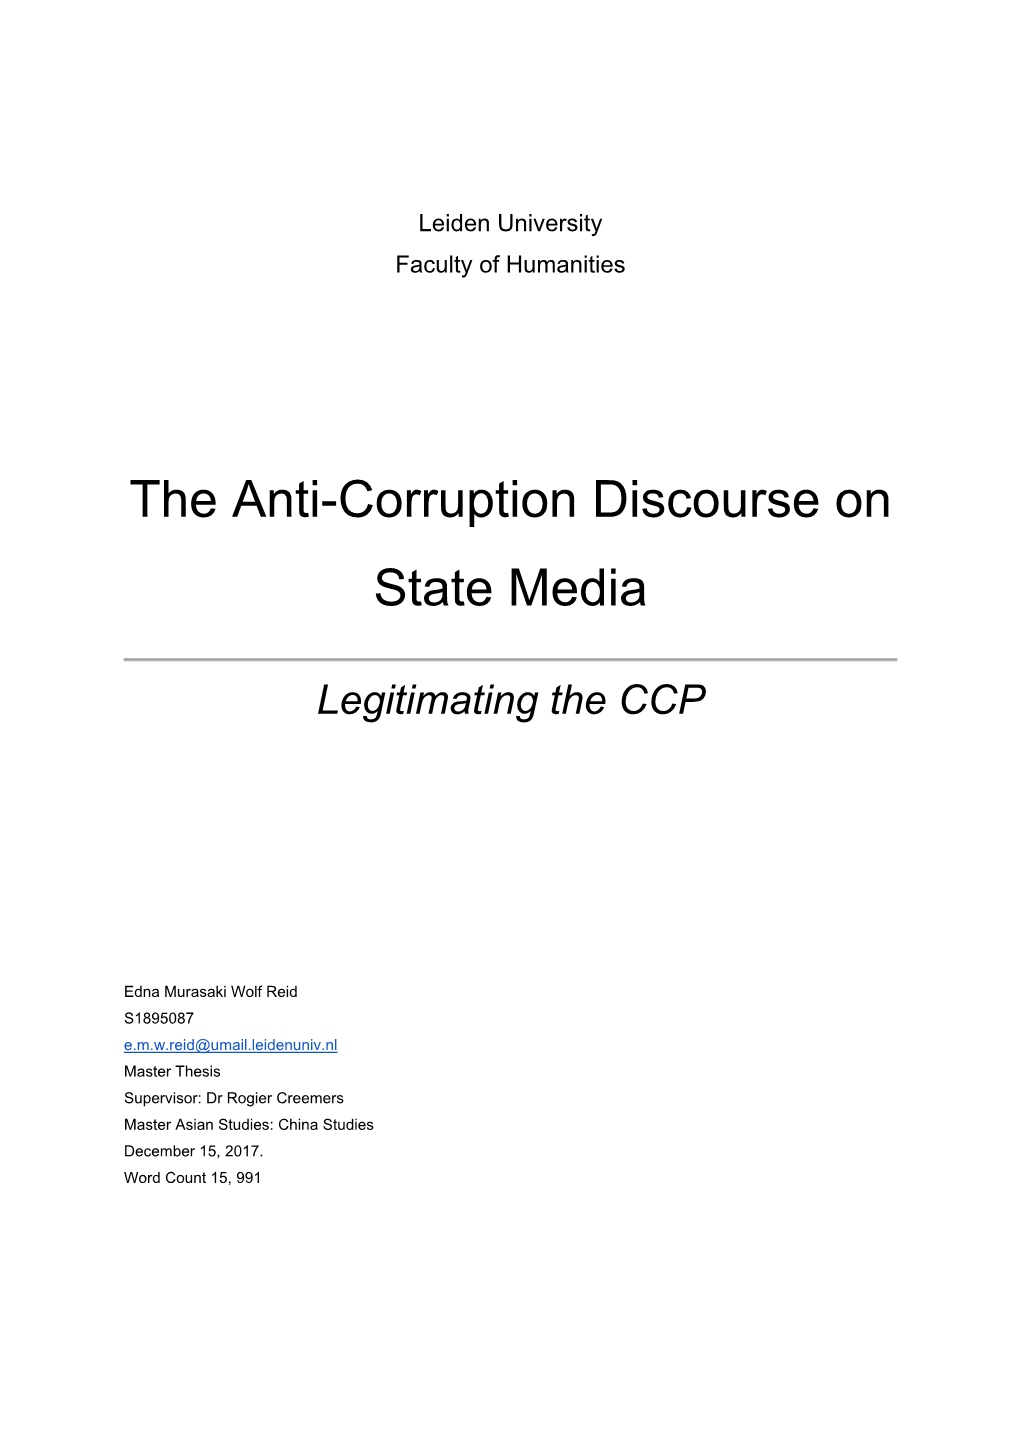 The Anti-Corruption Discourse on State Media